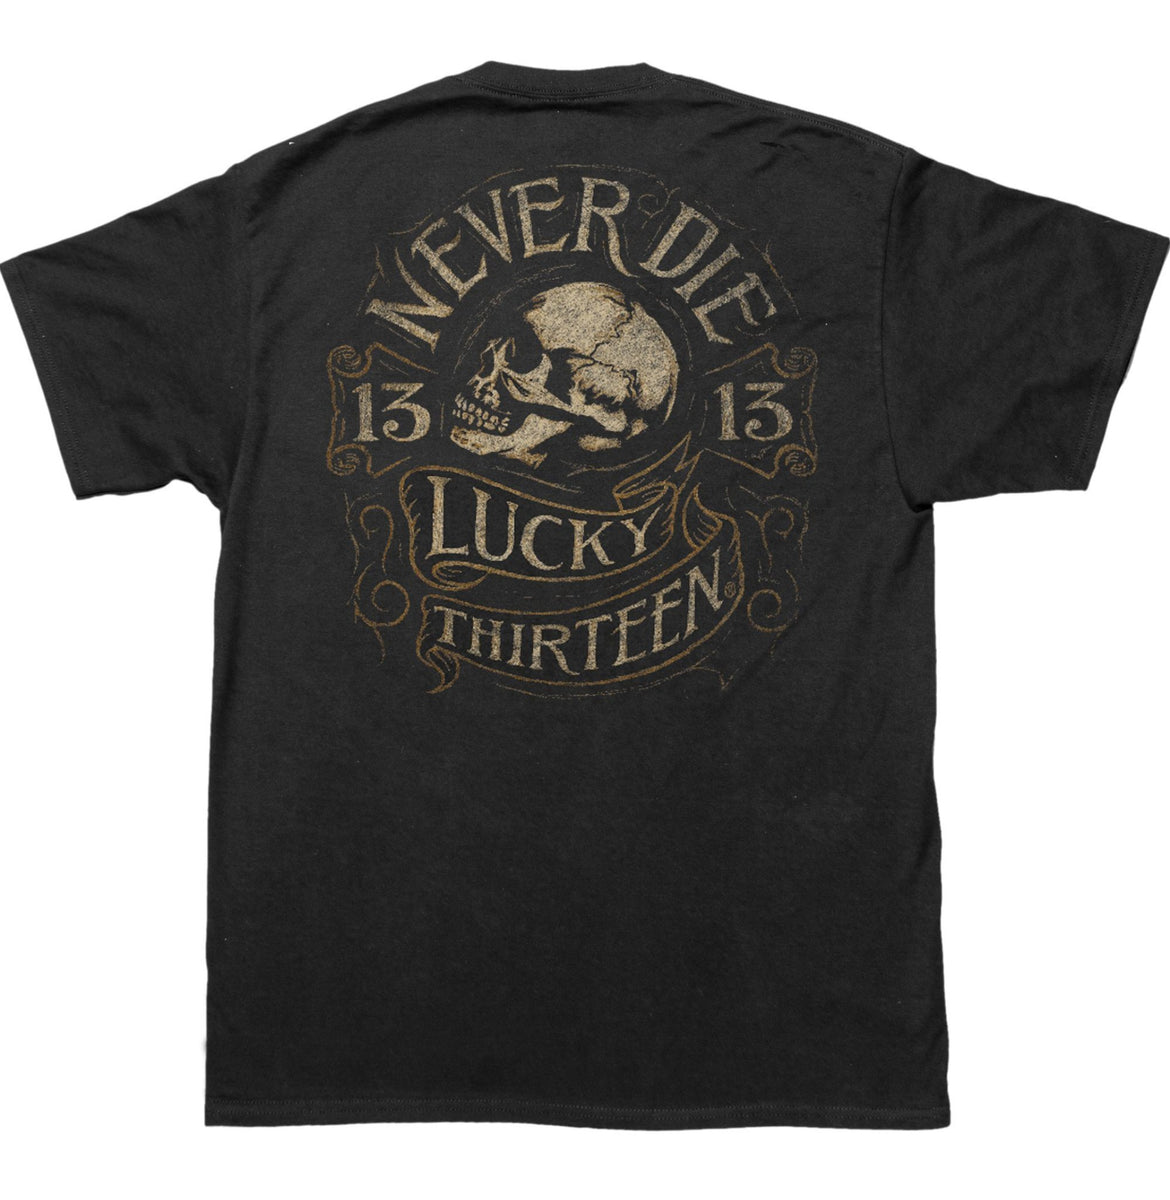 Never Die Mens Short Sleeve Tee Shirt By Lucky 13 Black – Lucky13apparel